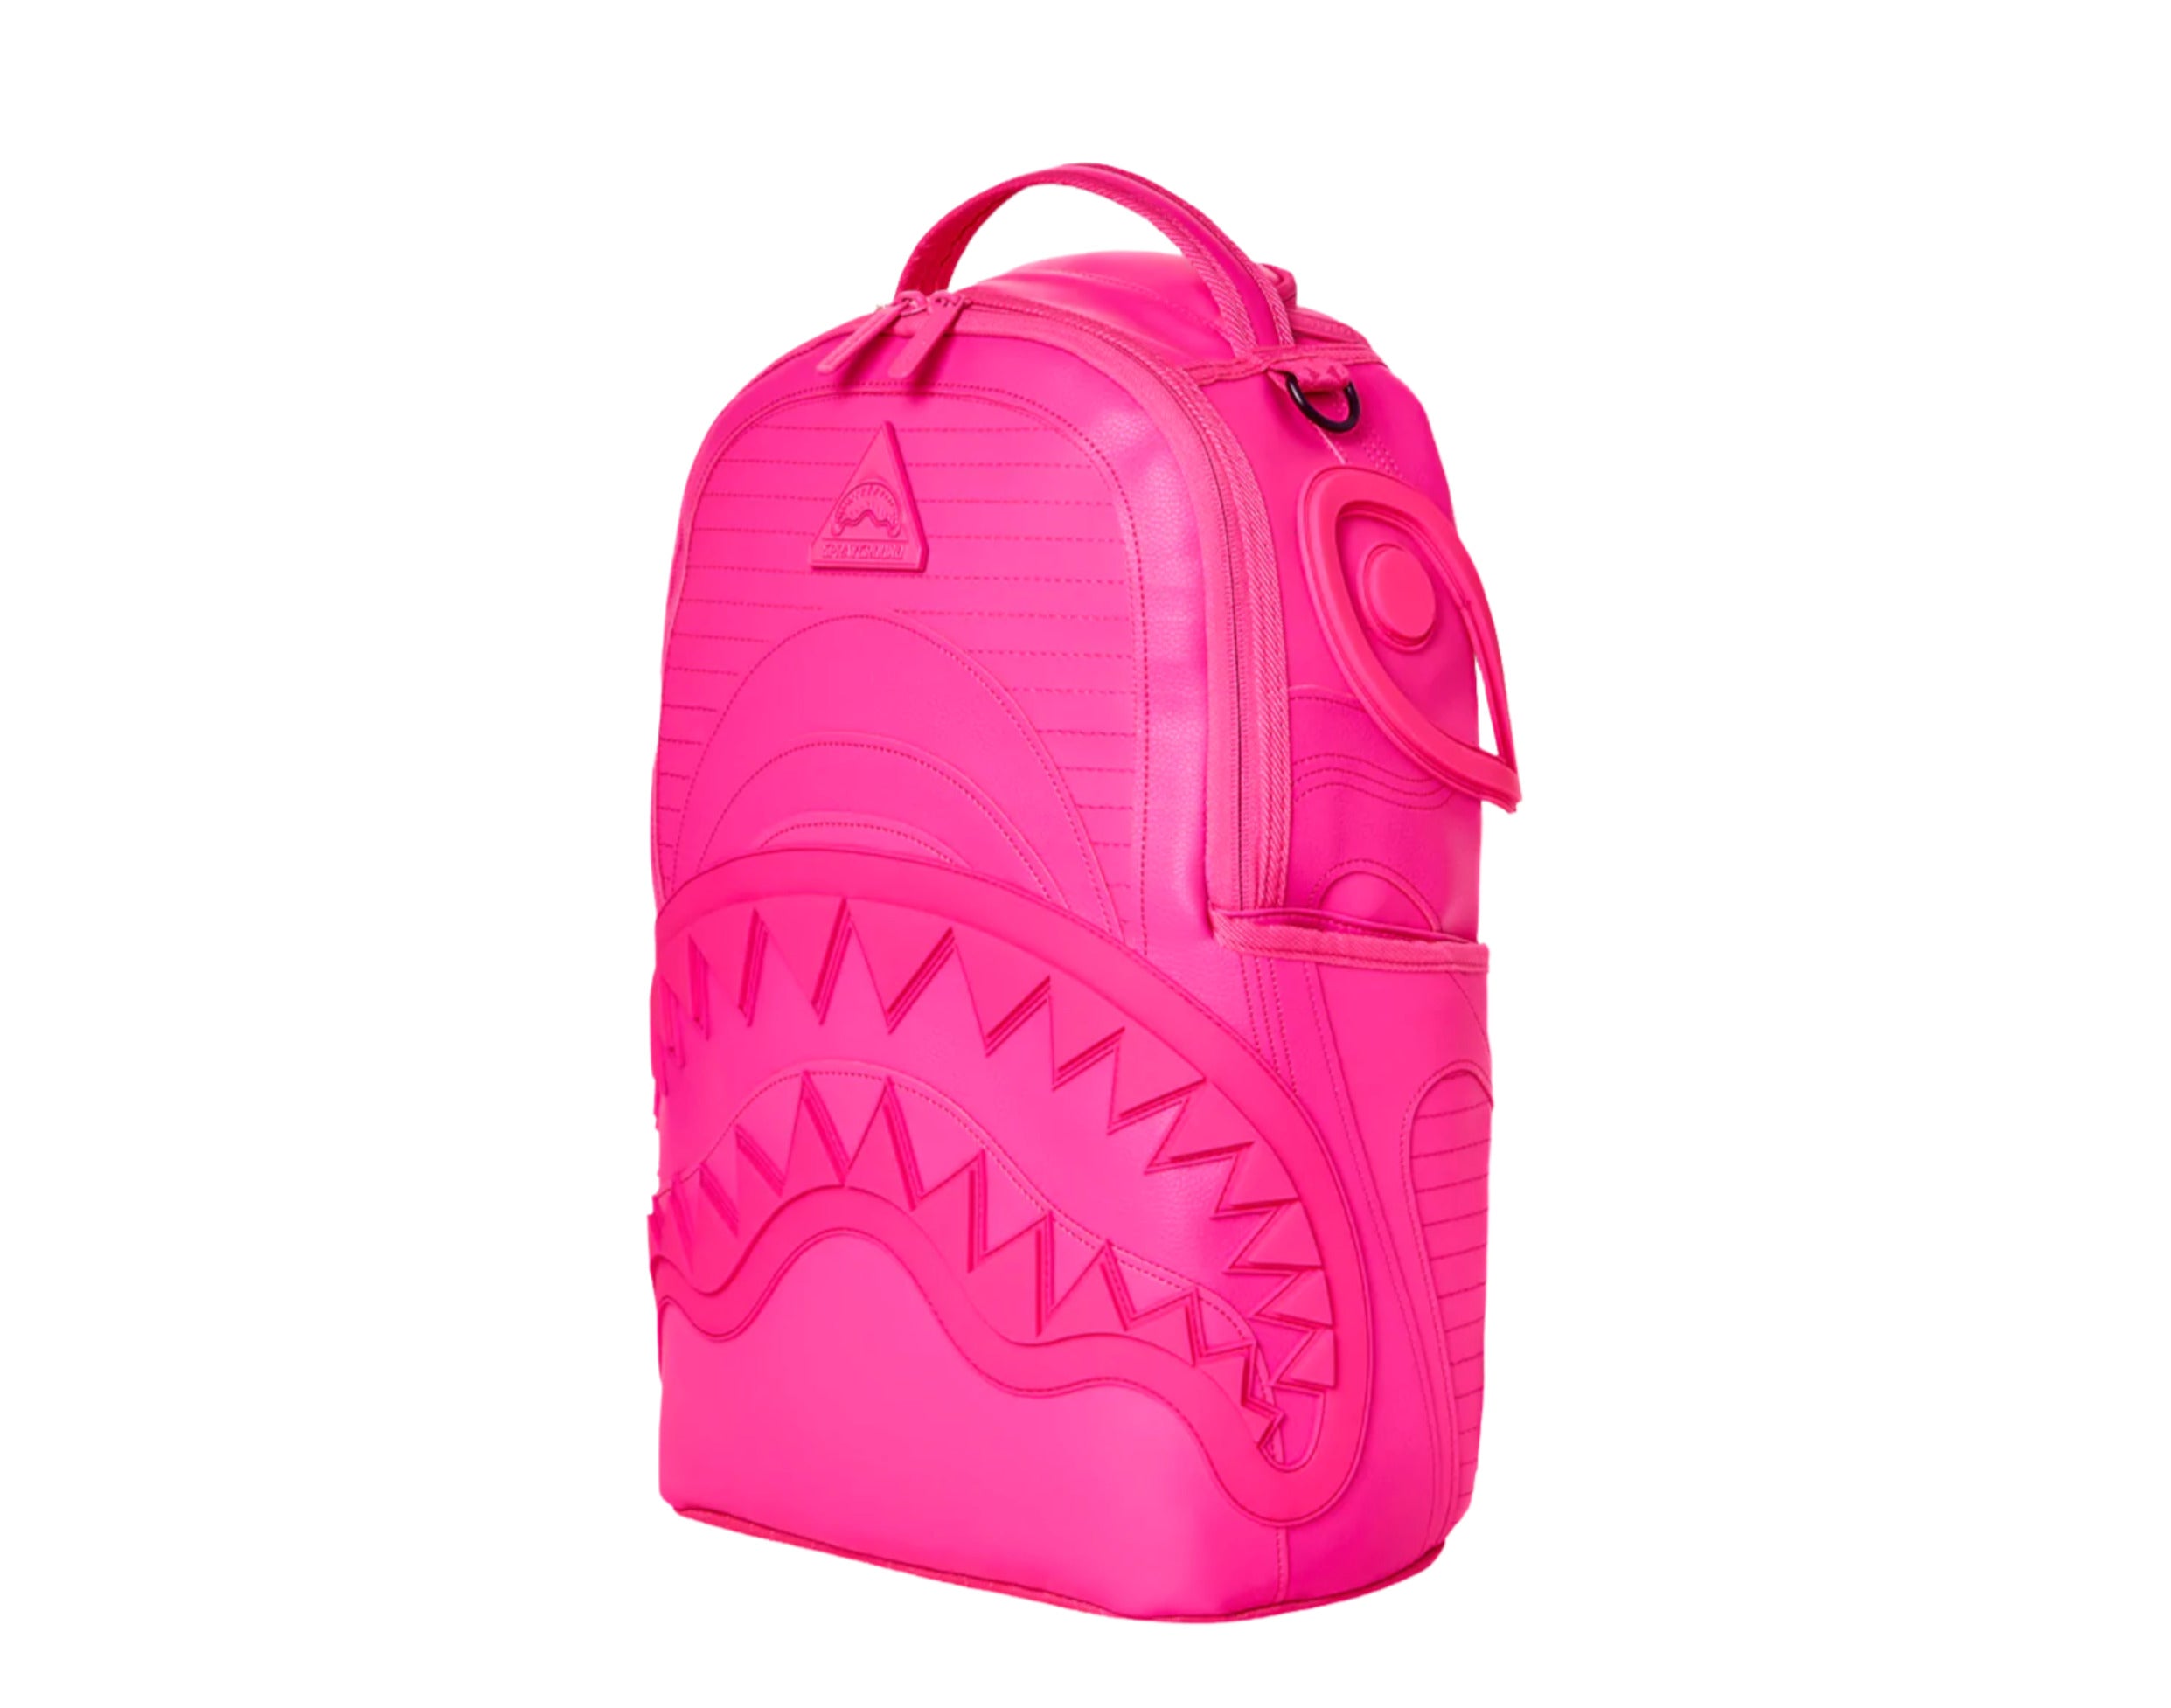 Sprayground Backpack Sakura Shockwave Pink Backpack Books Laptop Bag NEW